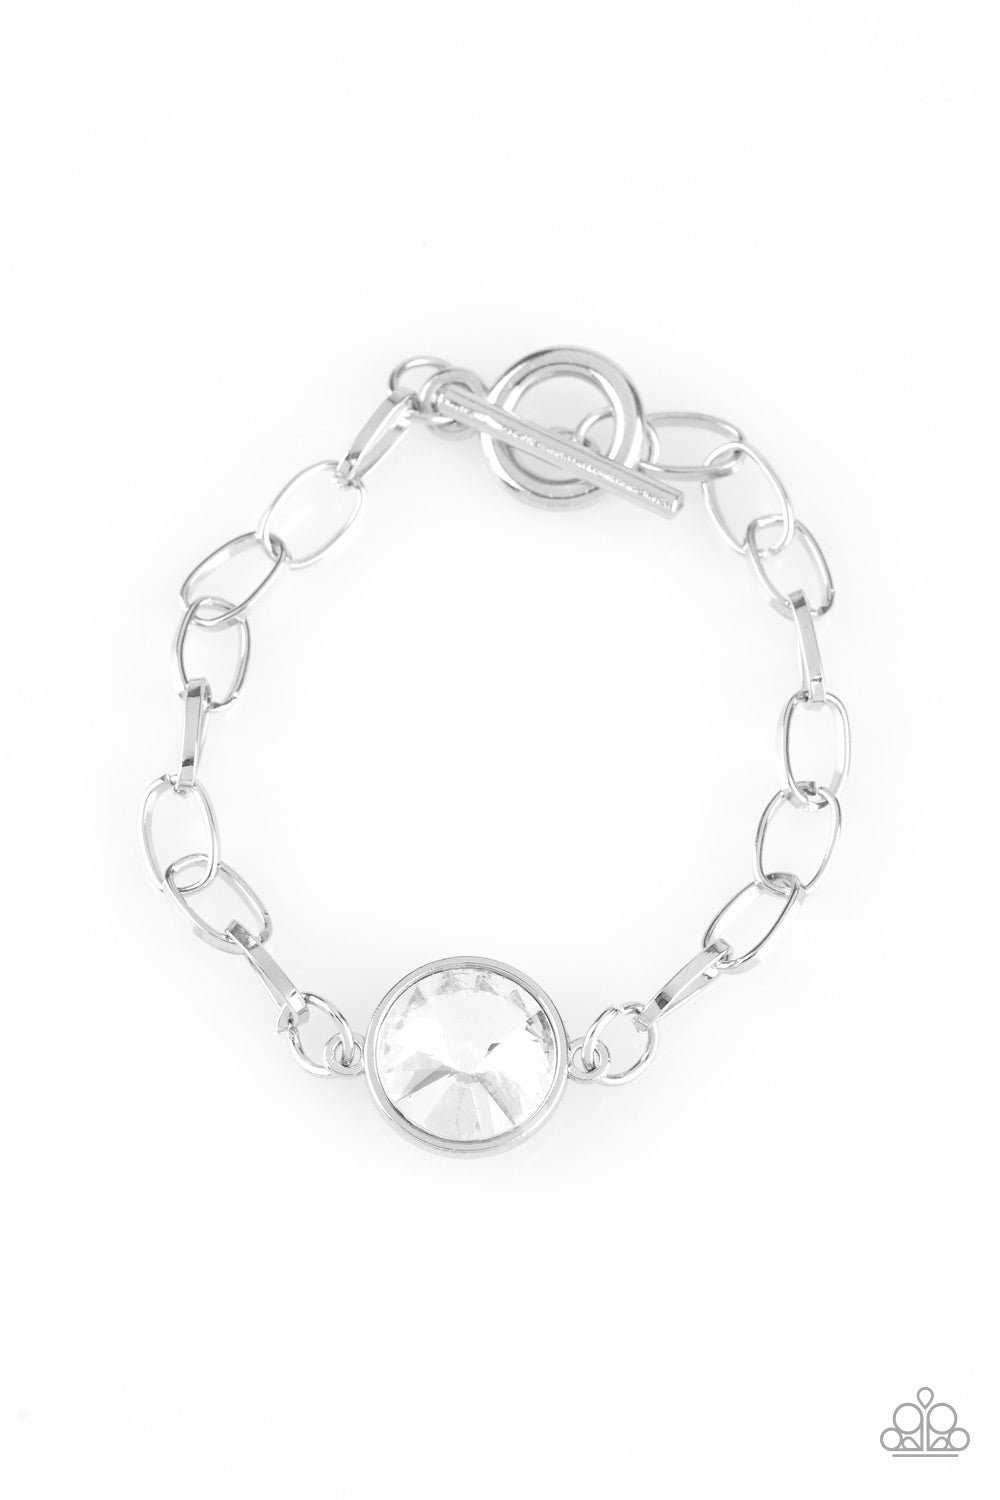 All Aglitter - White Bracelet freeshipping - JewLz4u Gemstone Gallery